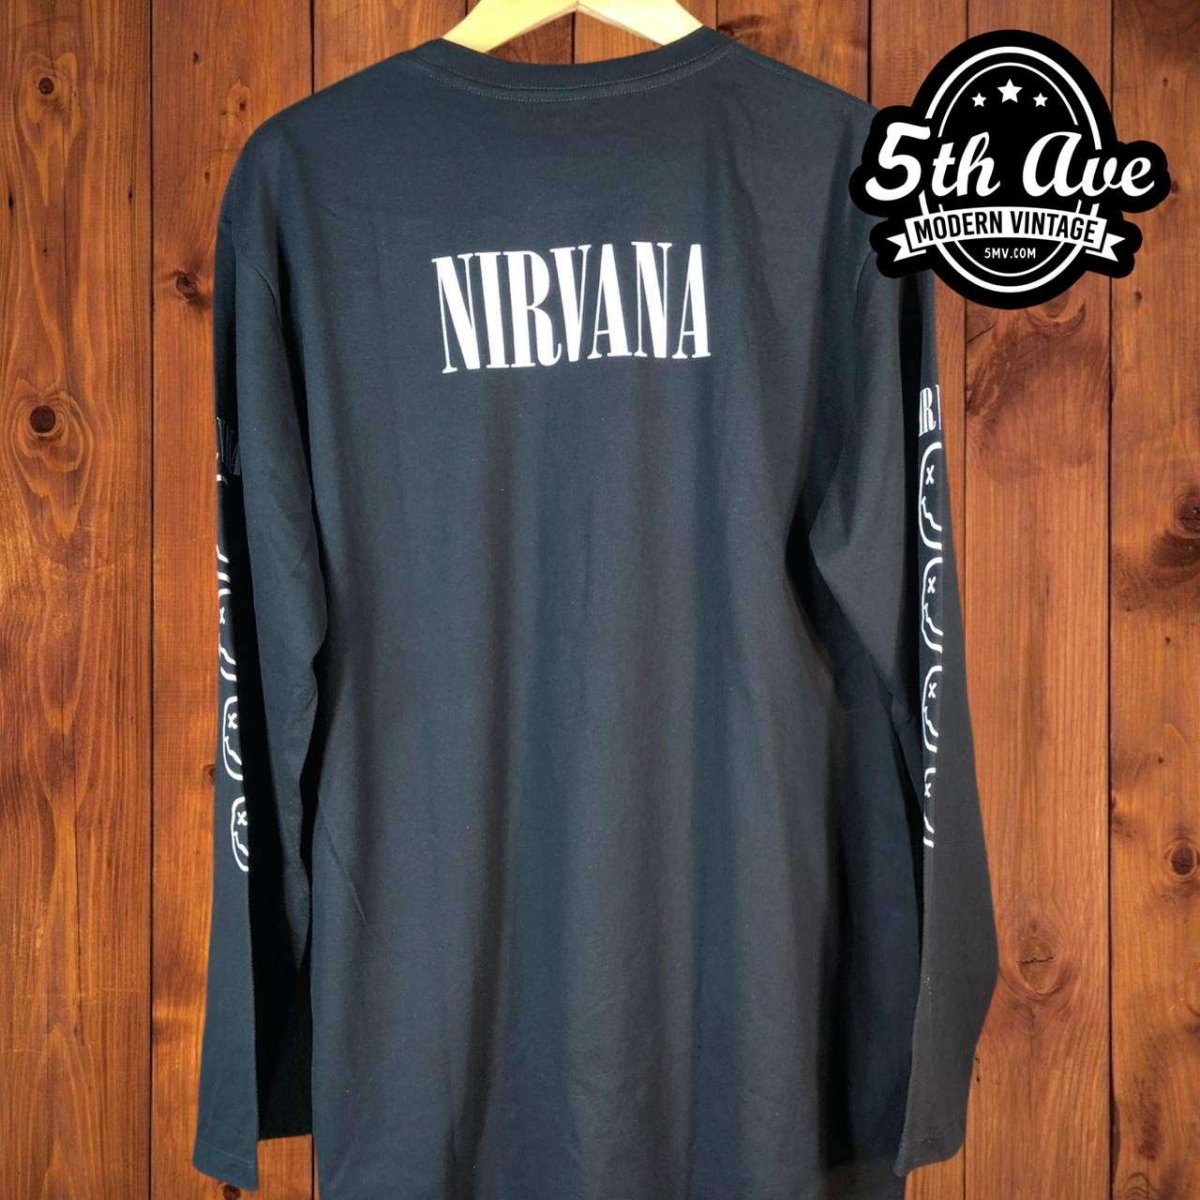 Nirvana Bleach - New Vintage Band Long Sleeve T Shirt - Vintage Band Shirts